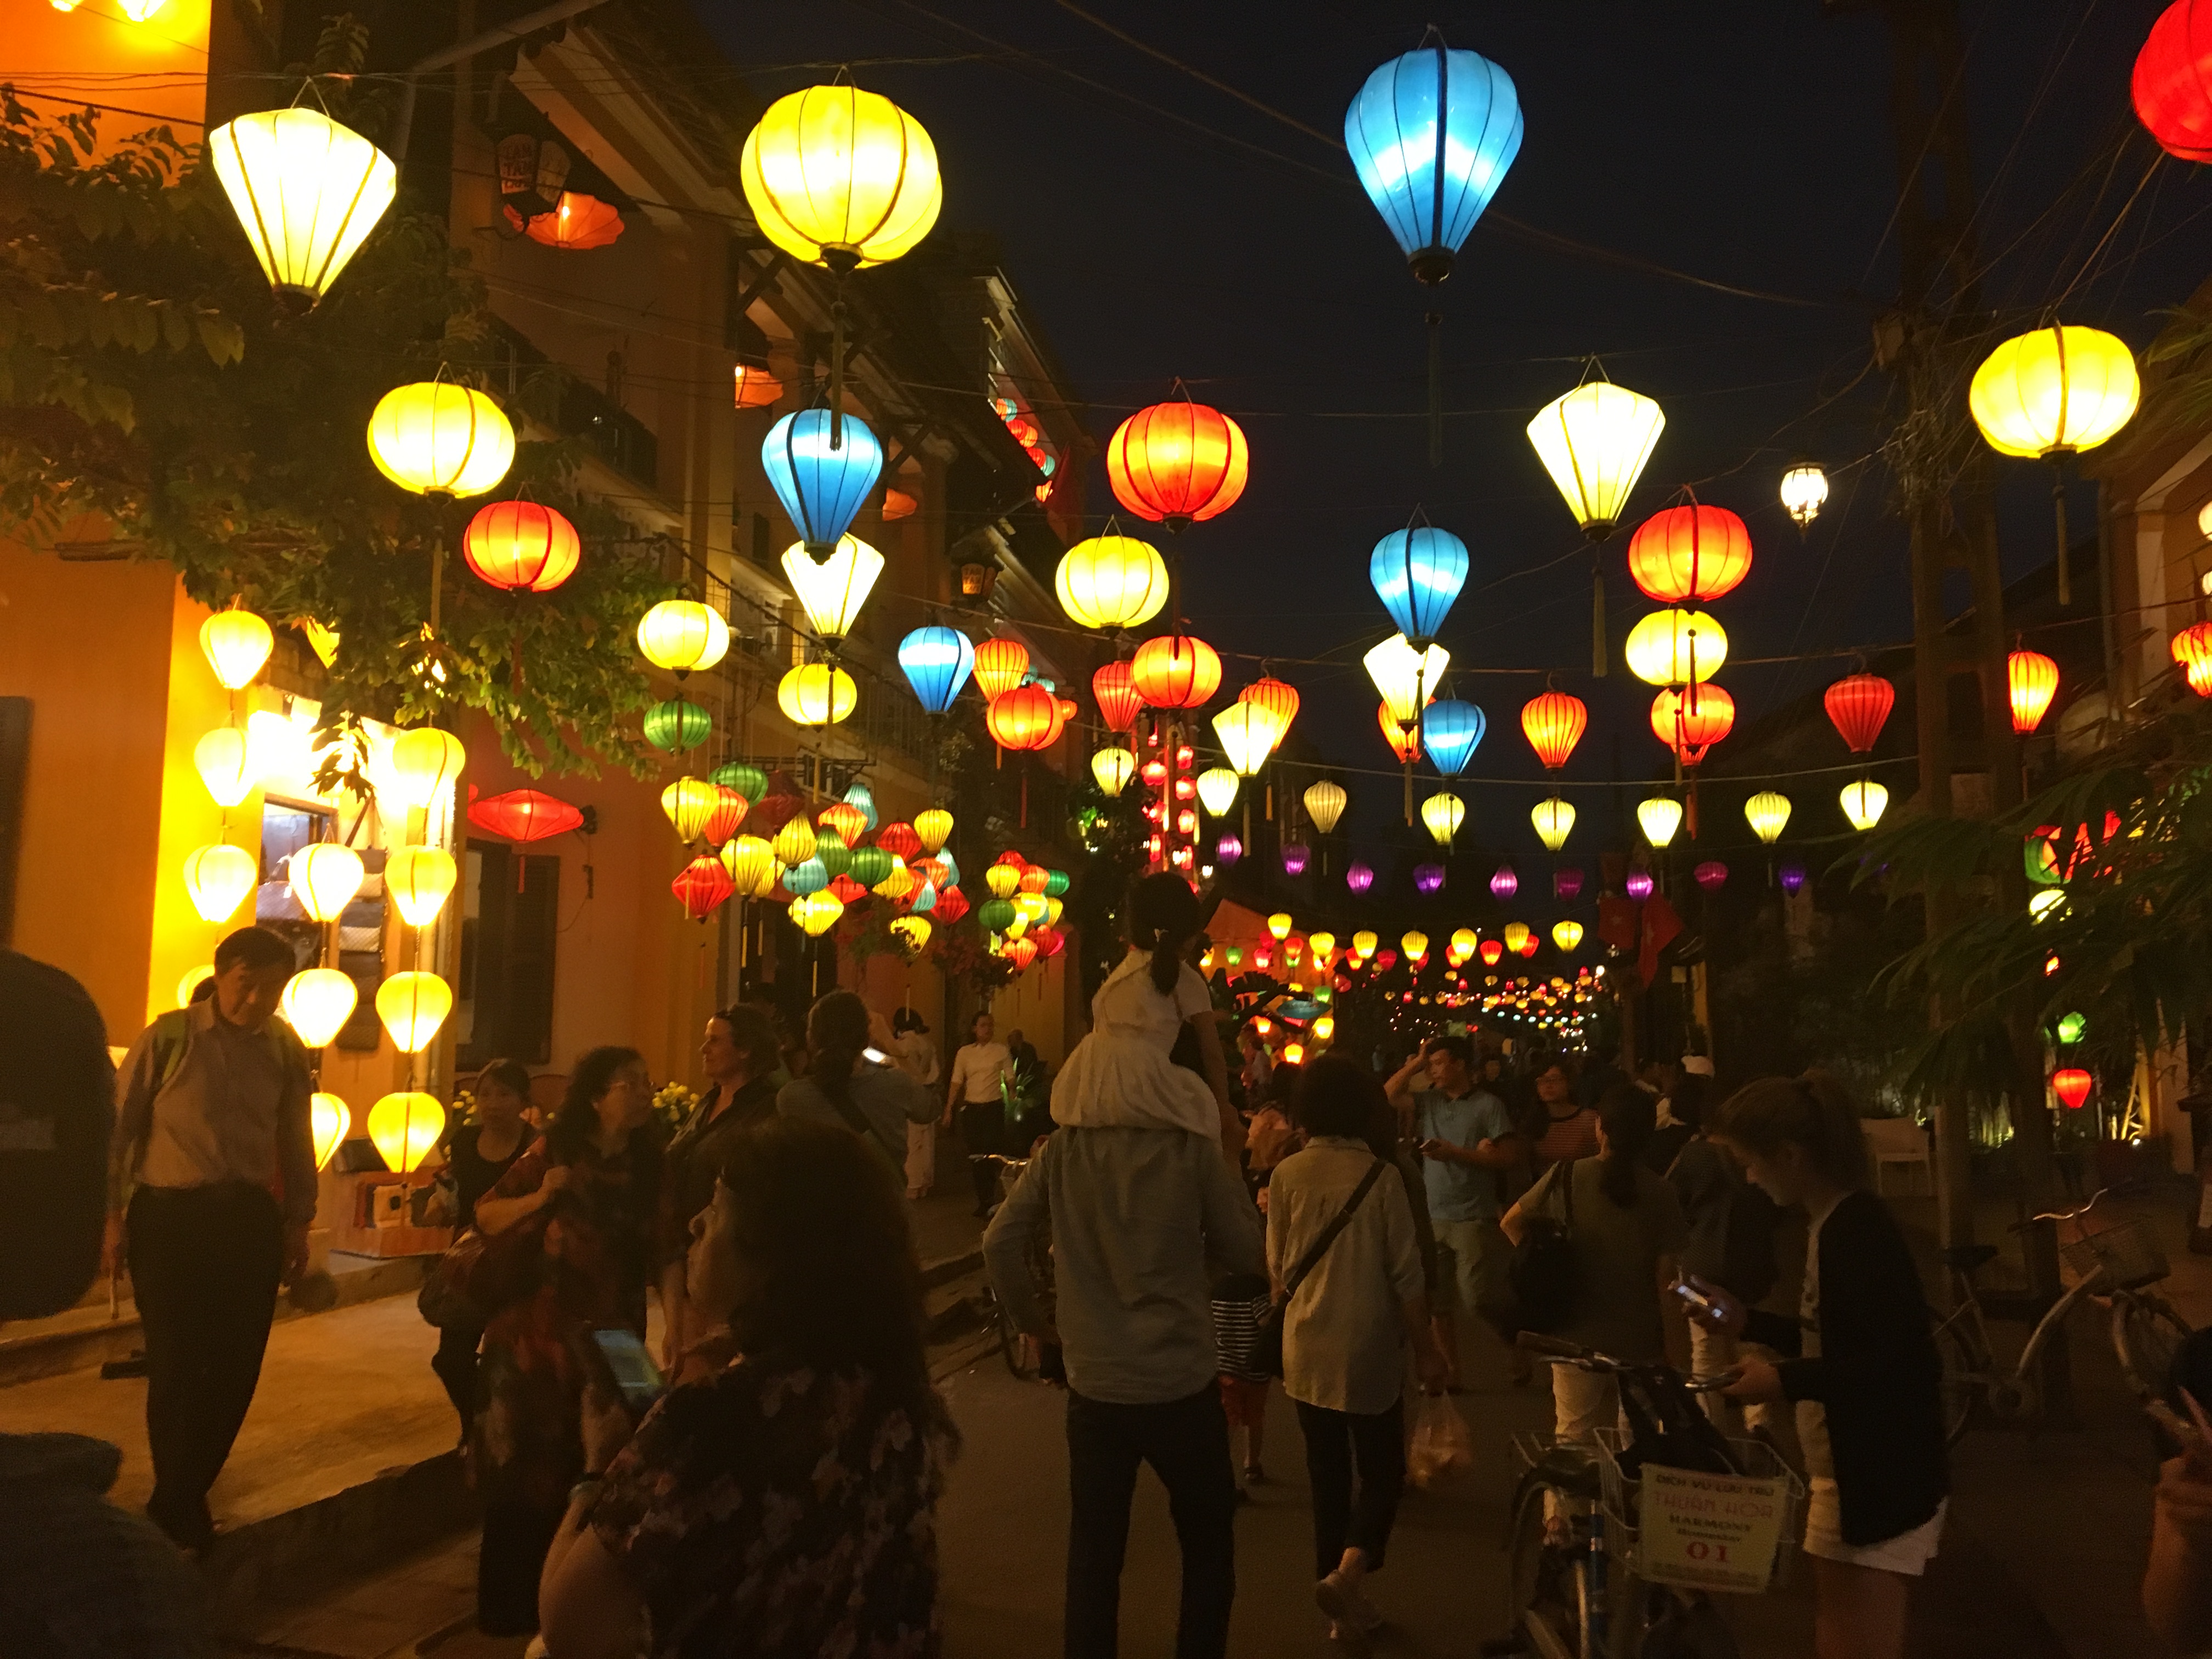 Street lanterns at night in Hoi An Ancient Town, Vietnam.